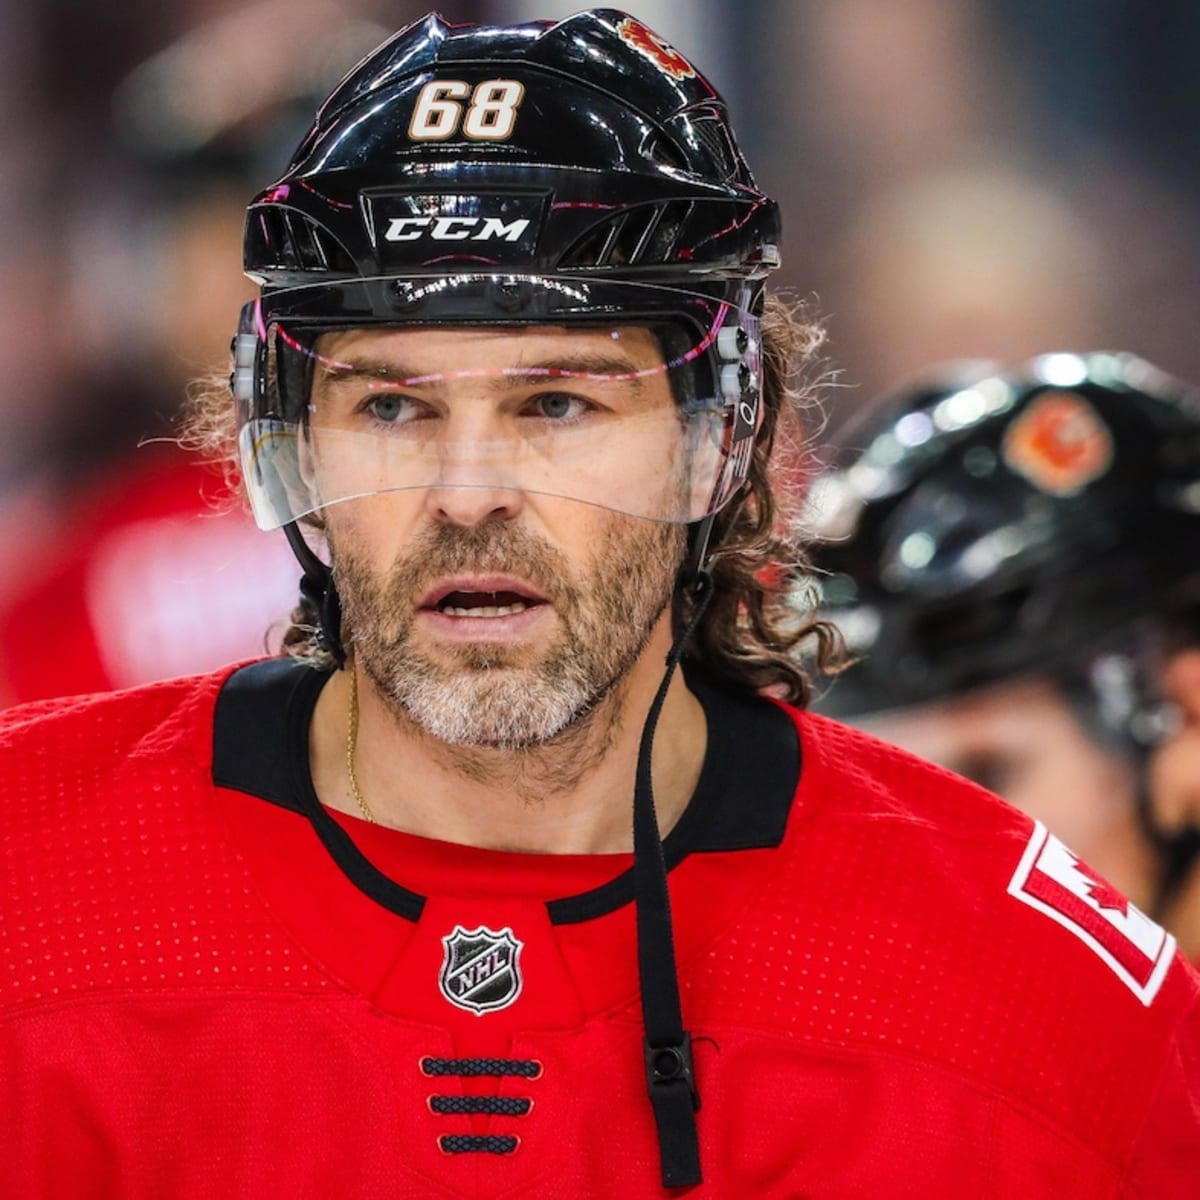 Penguins want to retire Jagr's #68, but Jagr refuses - HockeyFeed